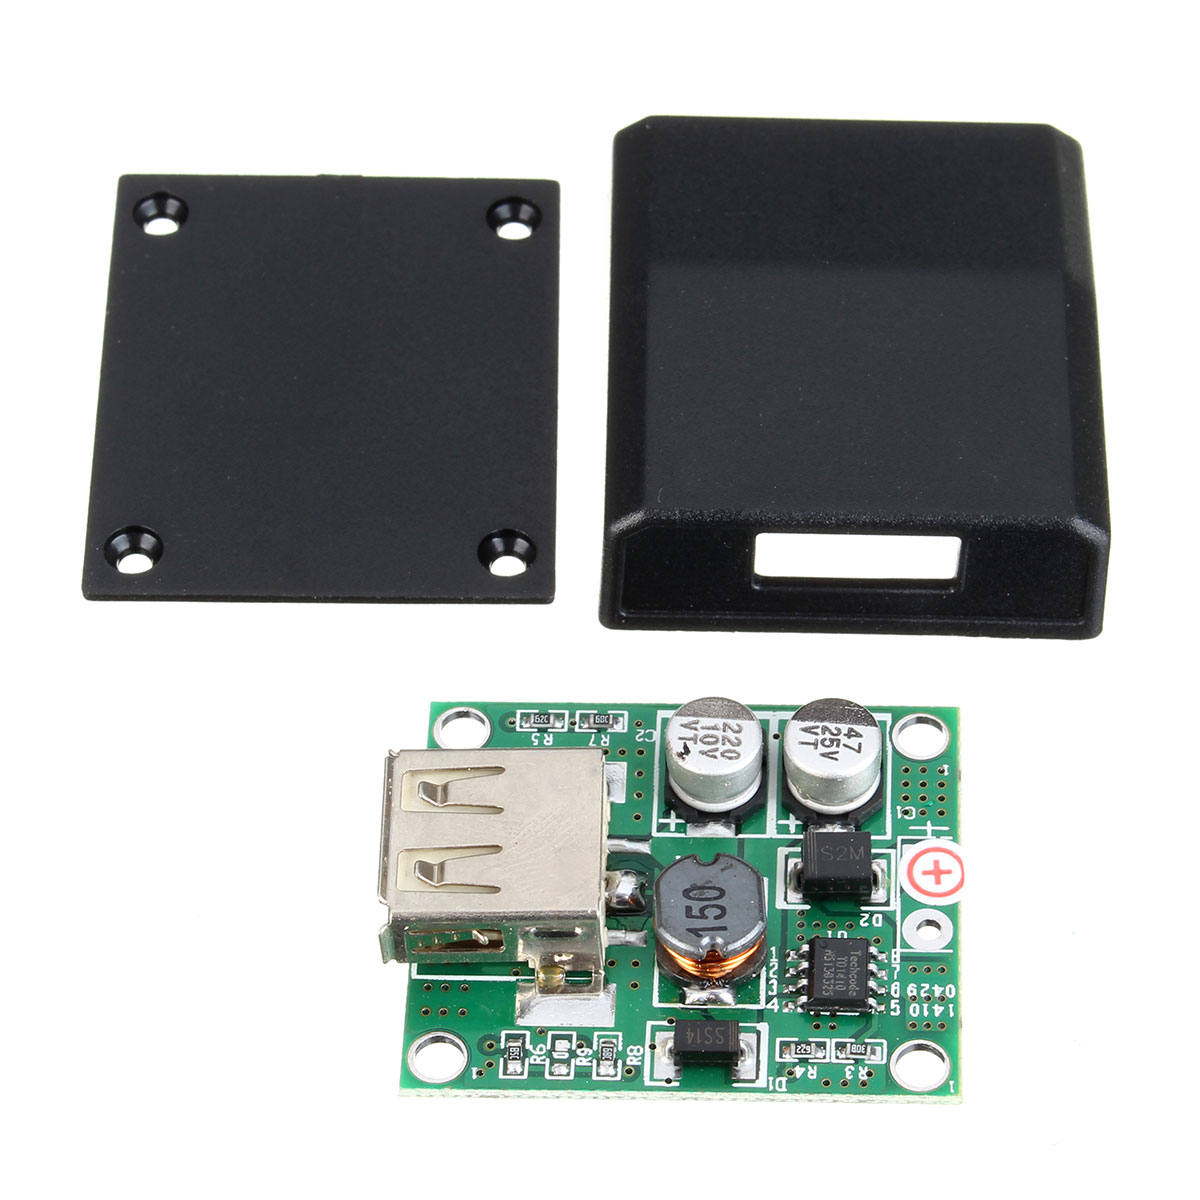 5pcs DIY 5V 2A Voltage Regulator Junction Box Solar Panel Charger Special Kit For Electronic Production 8